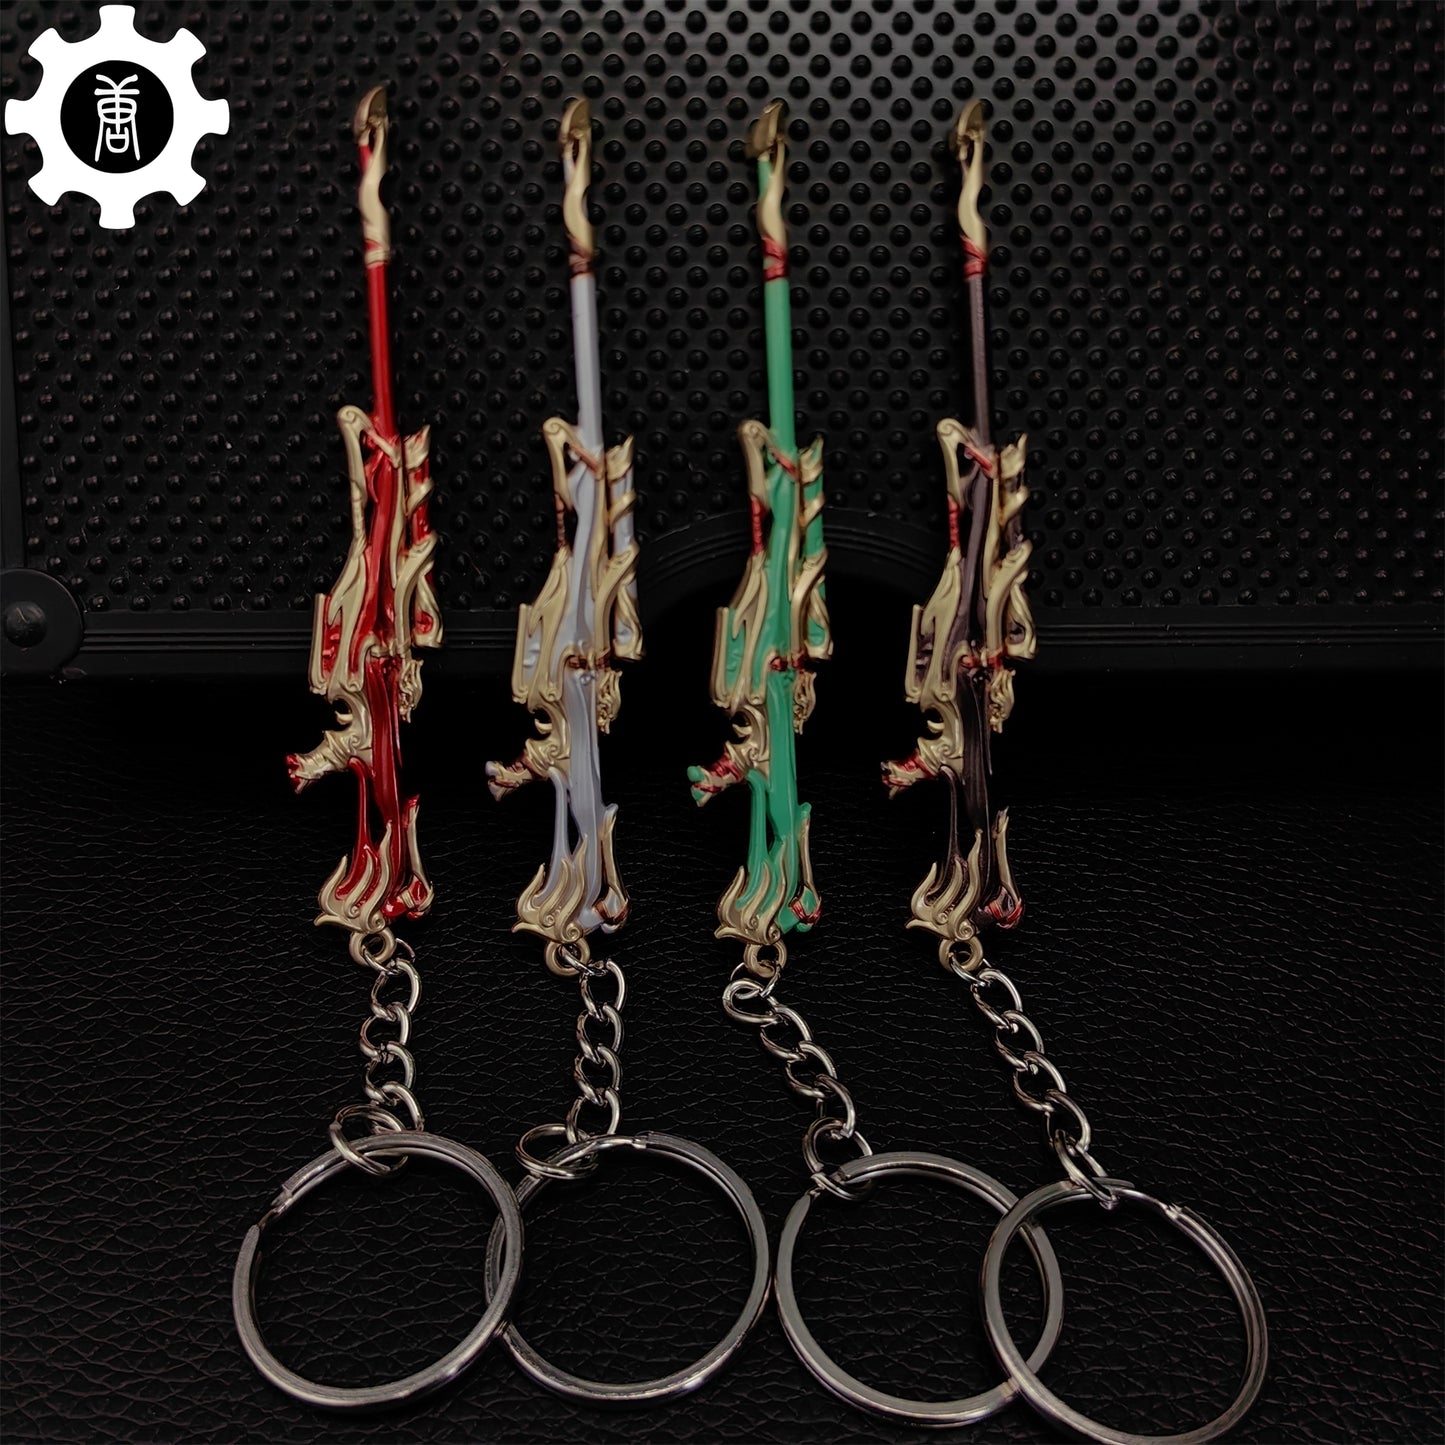 Metal Imperium Operator Gun Tiny Keychain Pendant 4 Colors Option